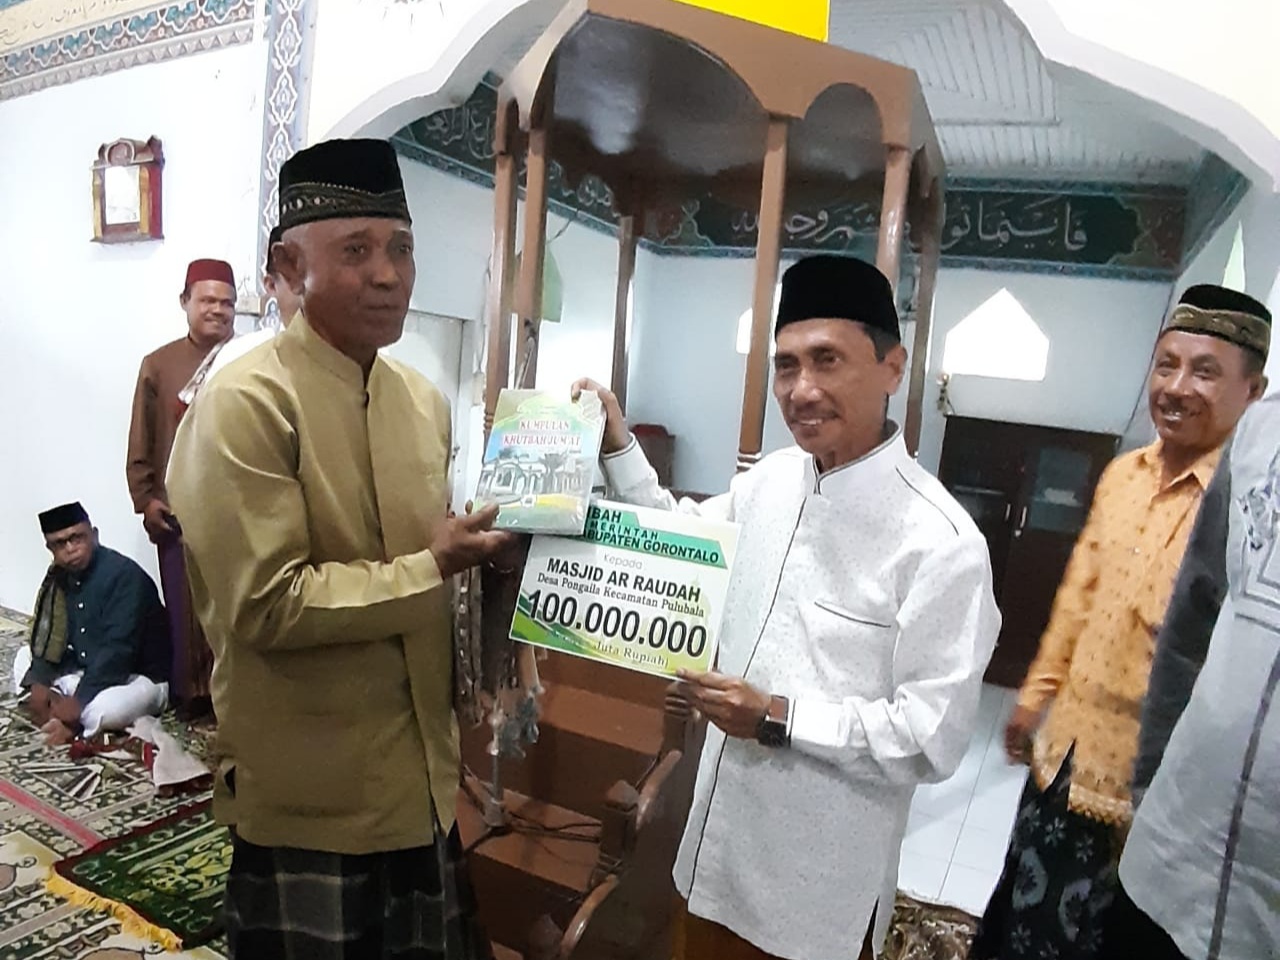 Bupati Gorontalo Serahkan Rp 100 Juta untuk Pembangunan Masjid